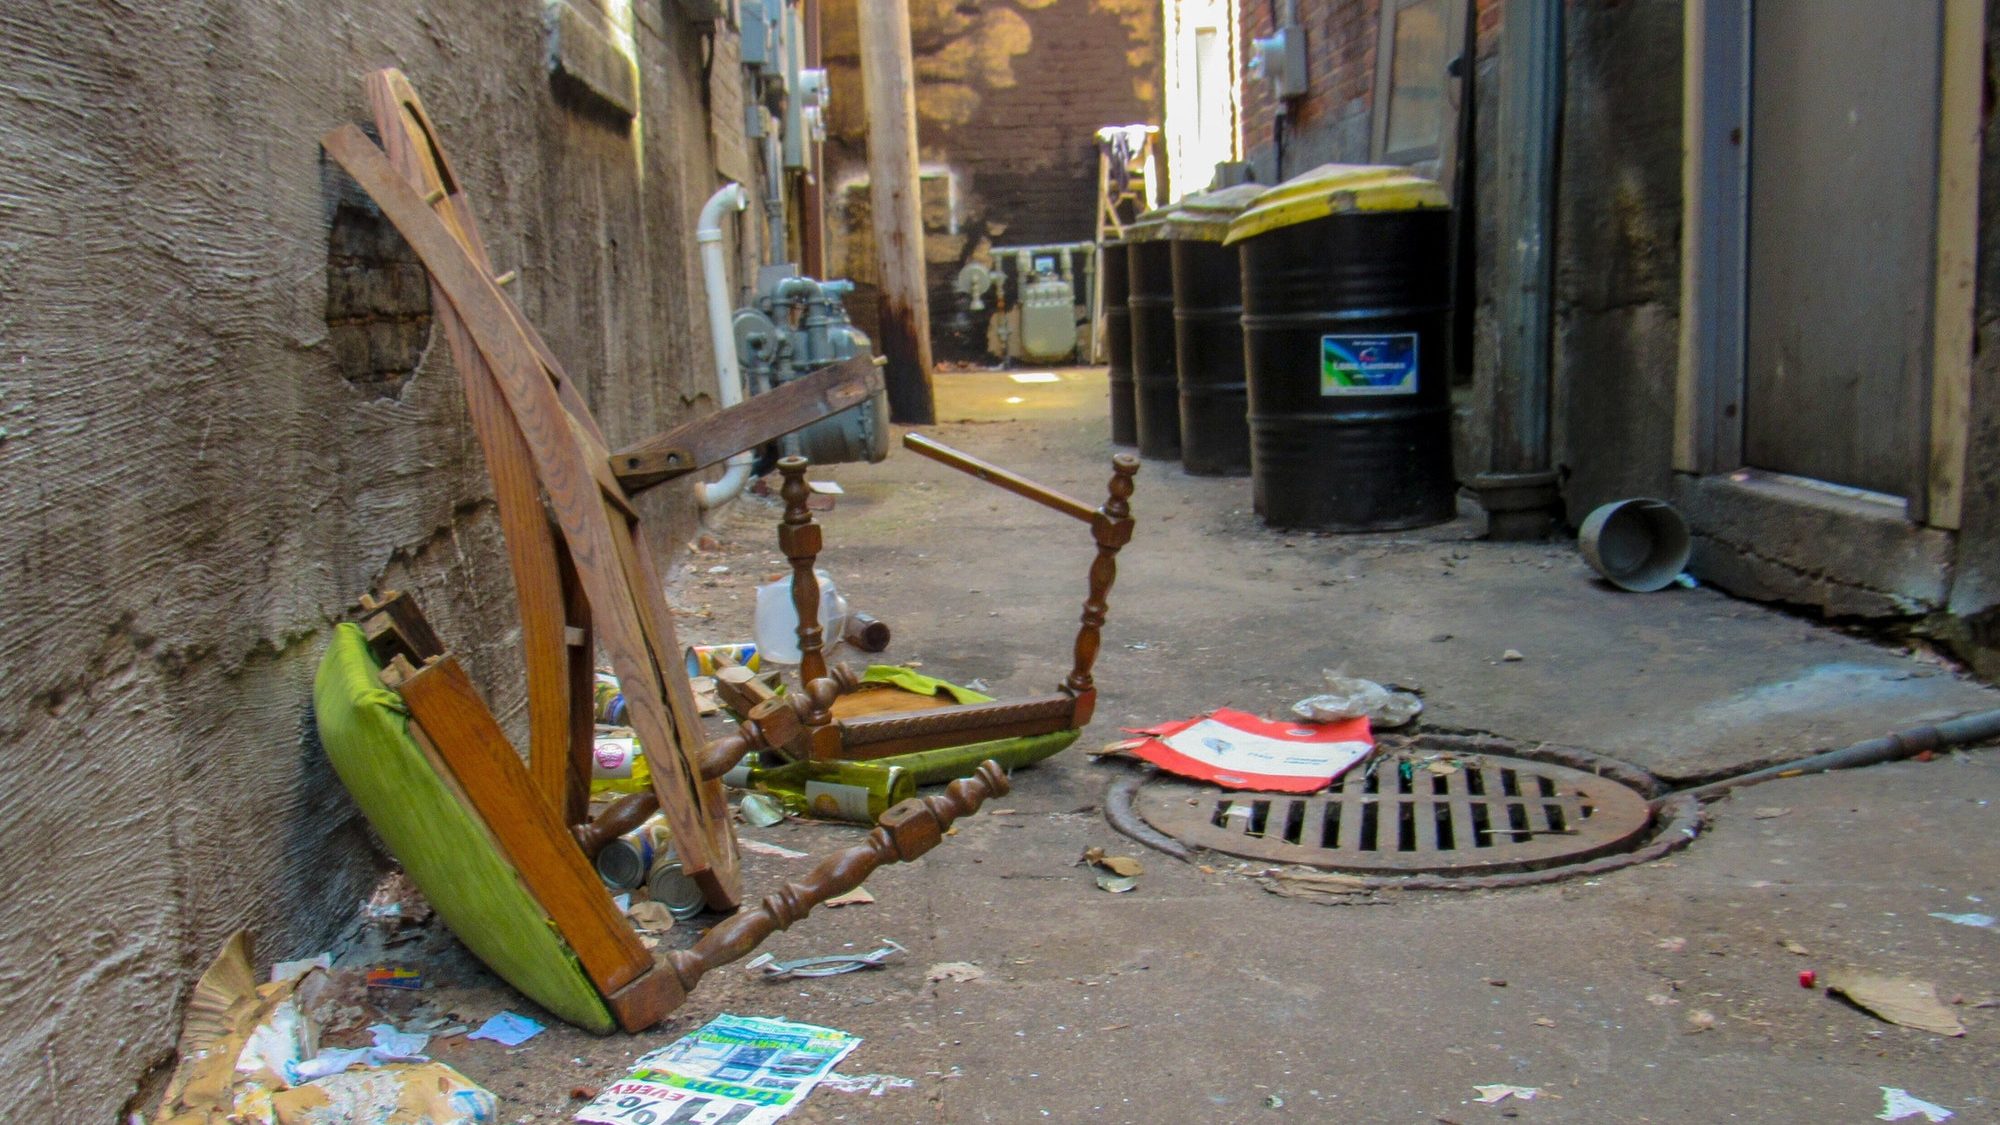 Discarded trash and broken furniture